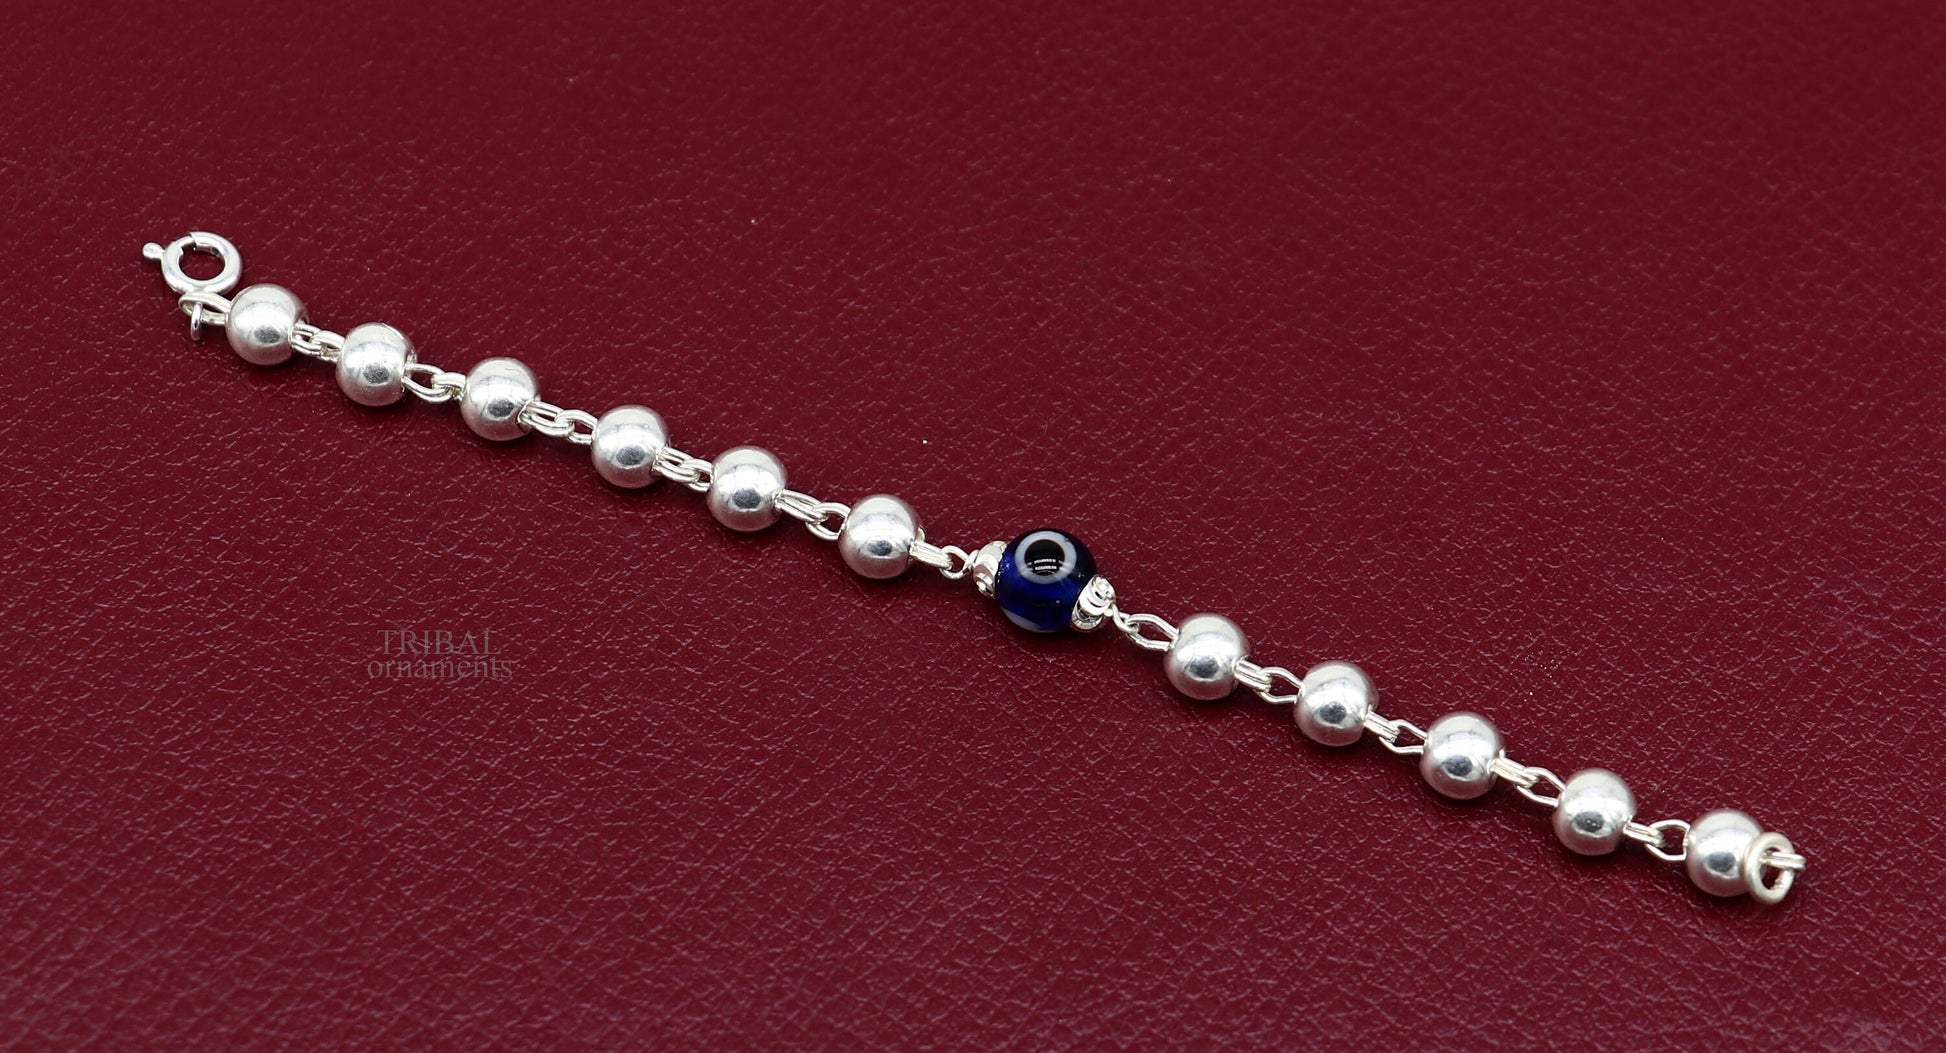 5" 925 sterling silver handmade beaded evil eye bracelet, amazing stylish unisex kids bracelet  jewelry nsbr474 - TRIBAL ORNAMENTS